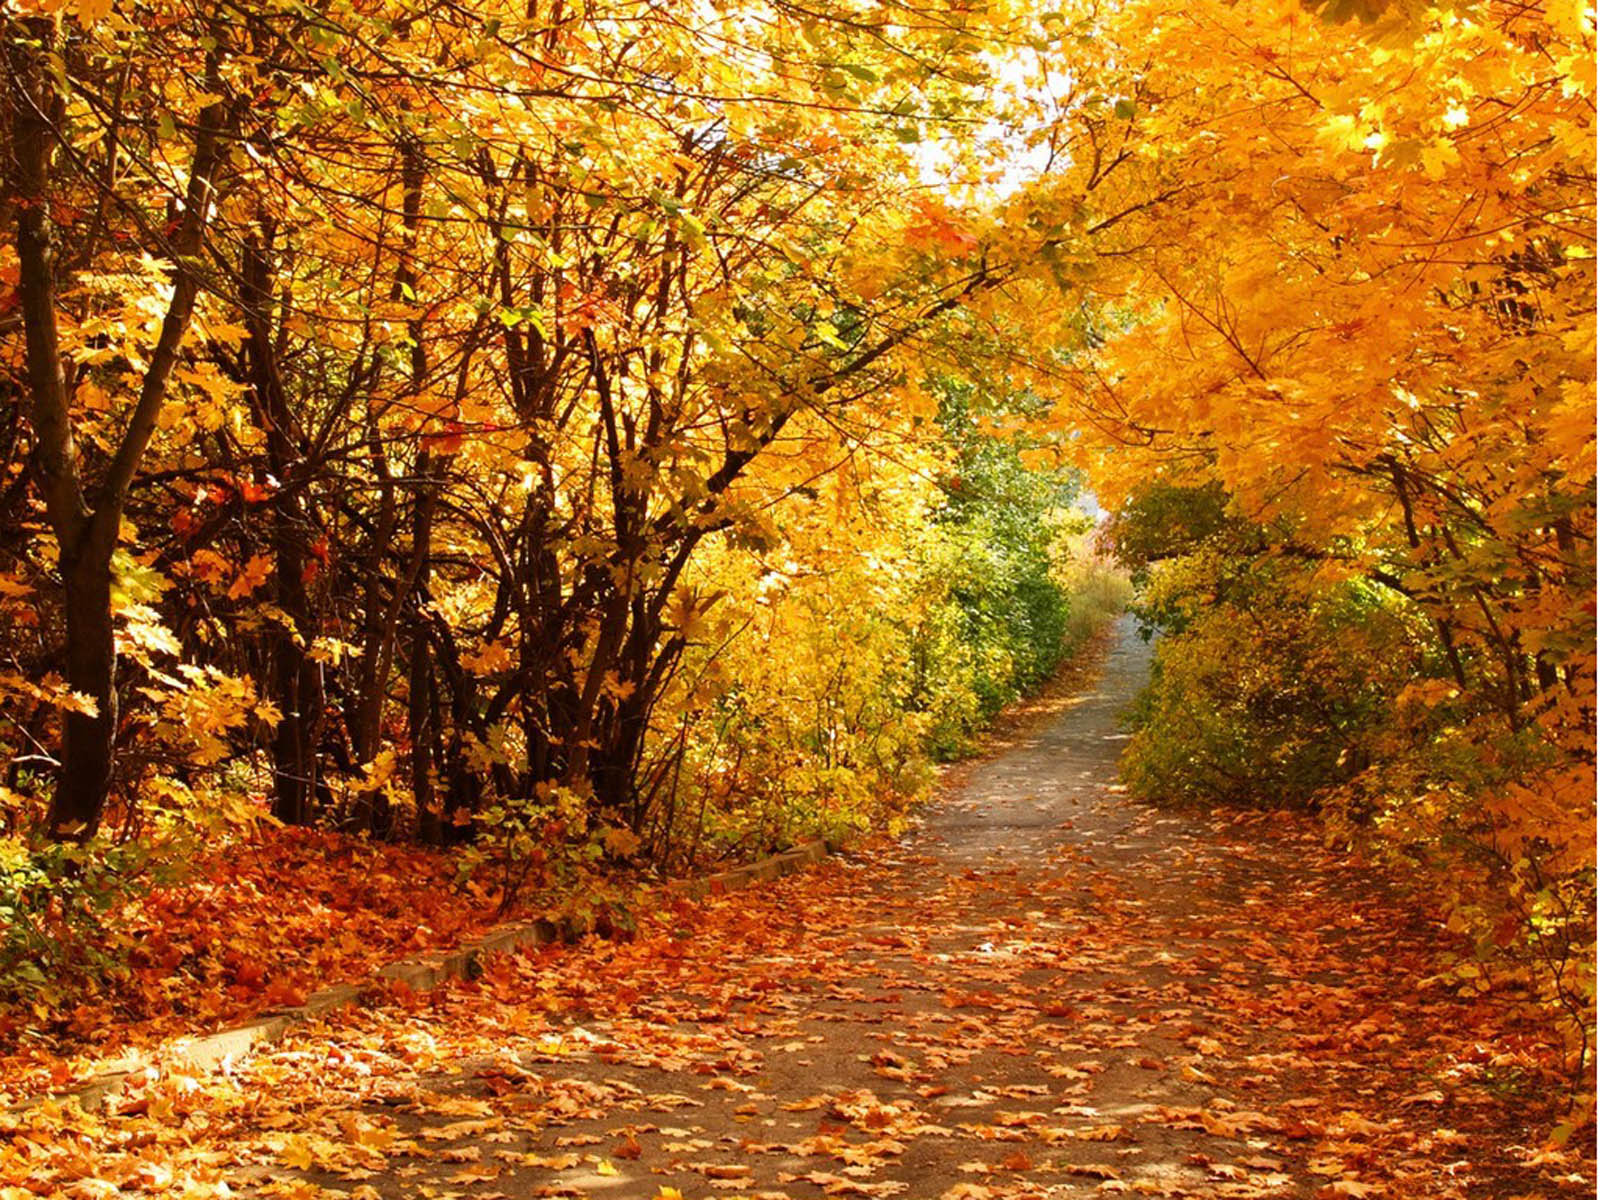 Autumn Scenery Wallpapers BeautifulAutumn Scenery Desktop Wallpapers 1600x1200